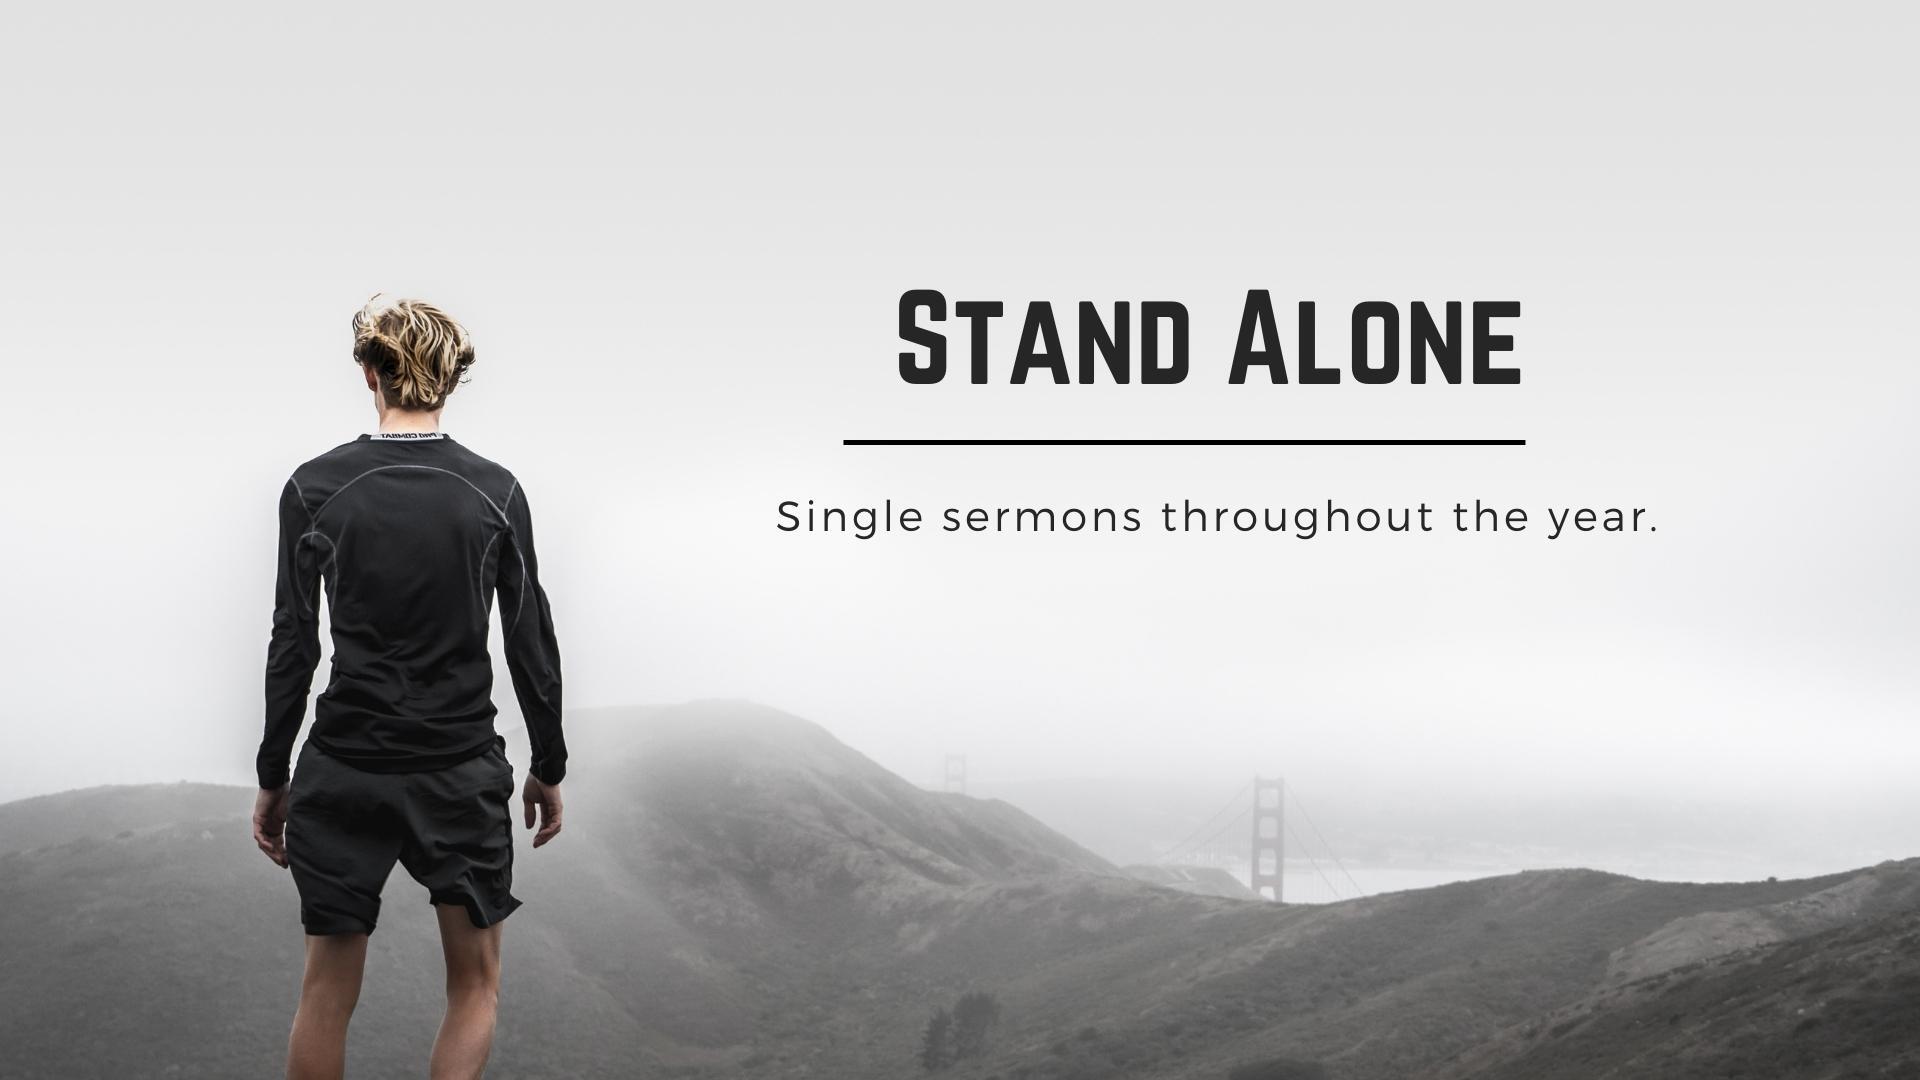 Stand Alone Logo